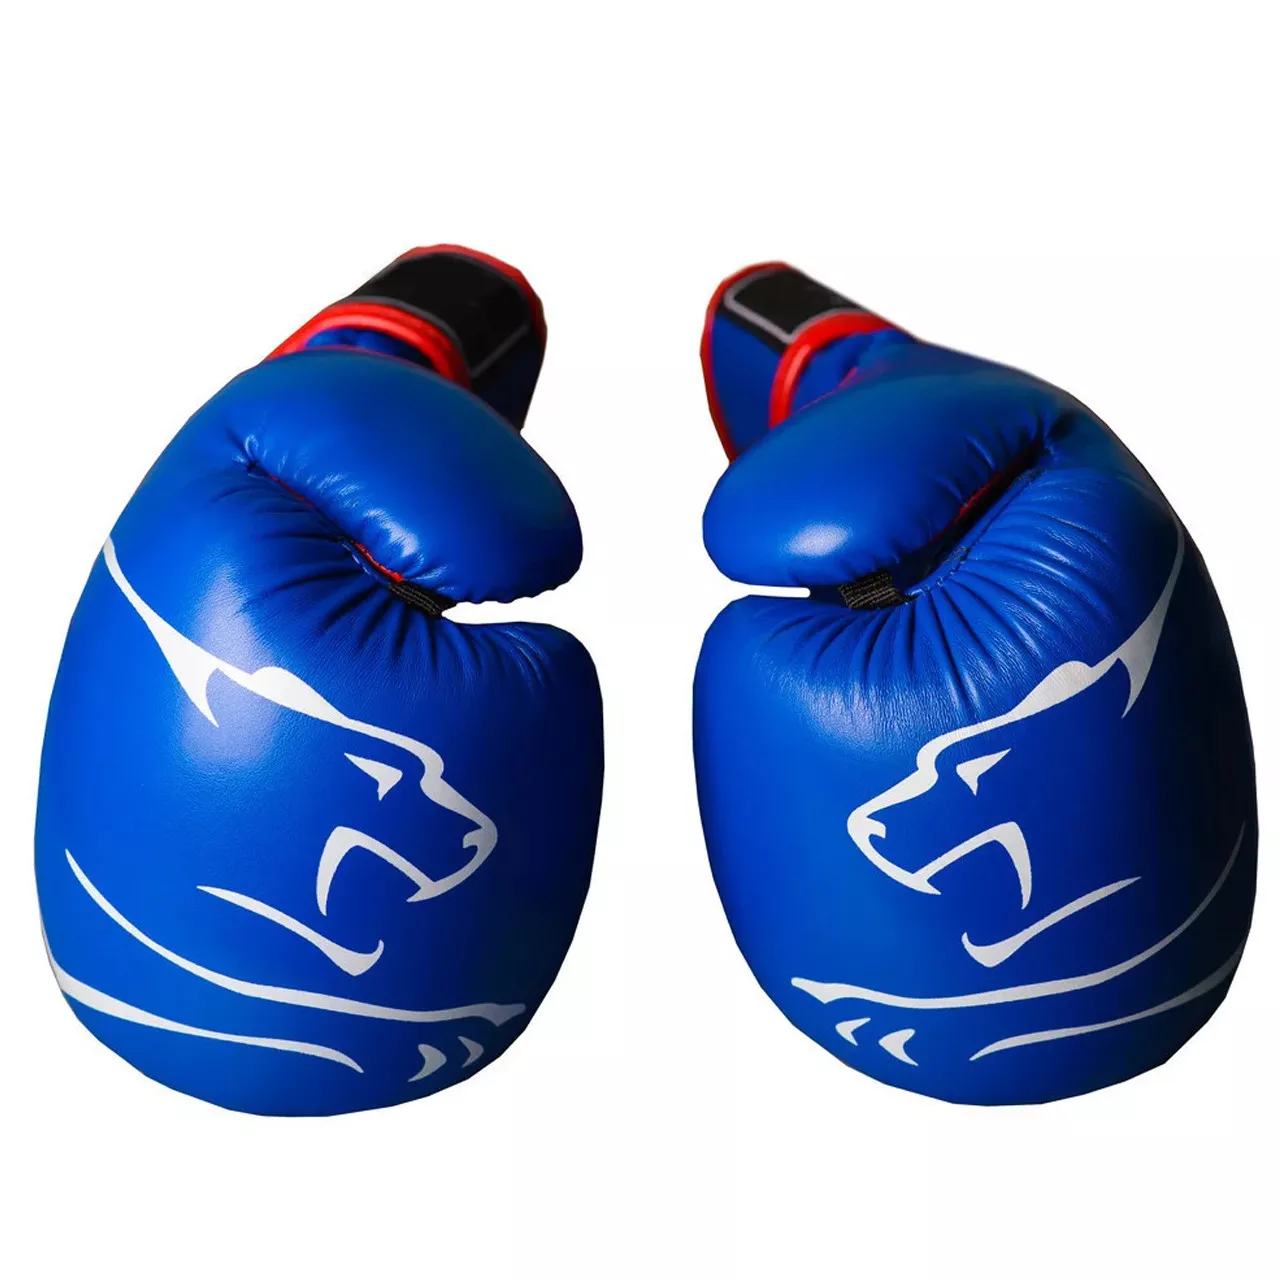 Боксерские перчатки PowerPlay 3018 синие 8 унций